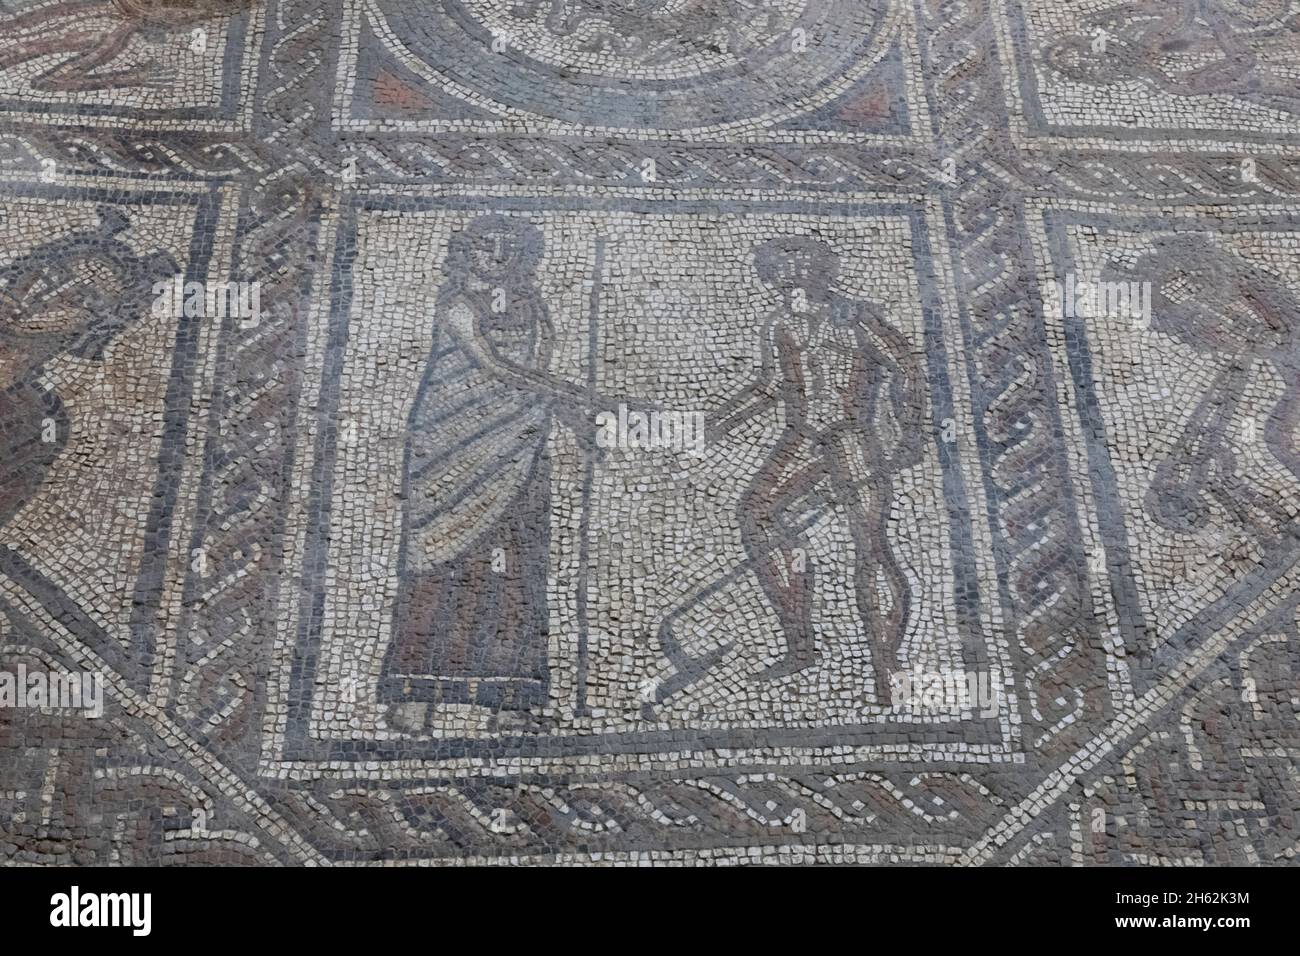 inglaterra, isla de wight, villa romana brading, mosaico que representa ceres la diosa de la agricultura Foto de stock